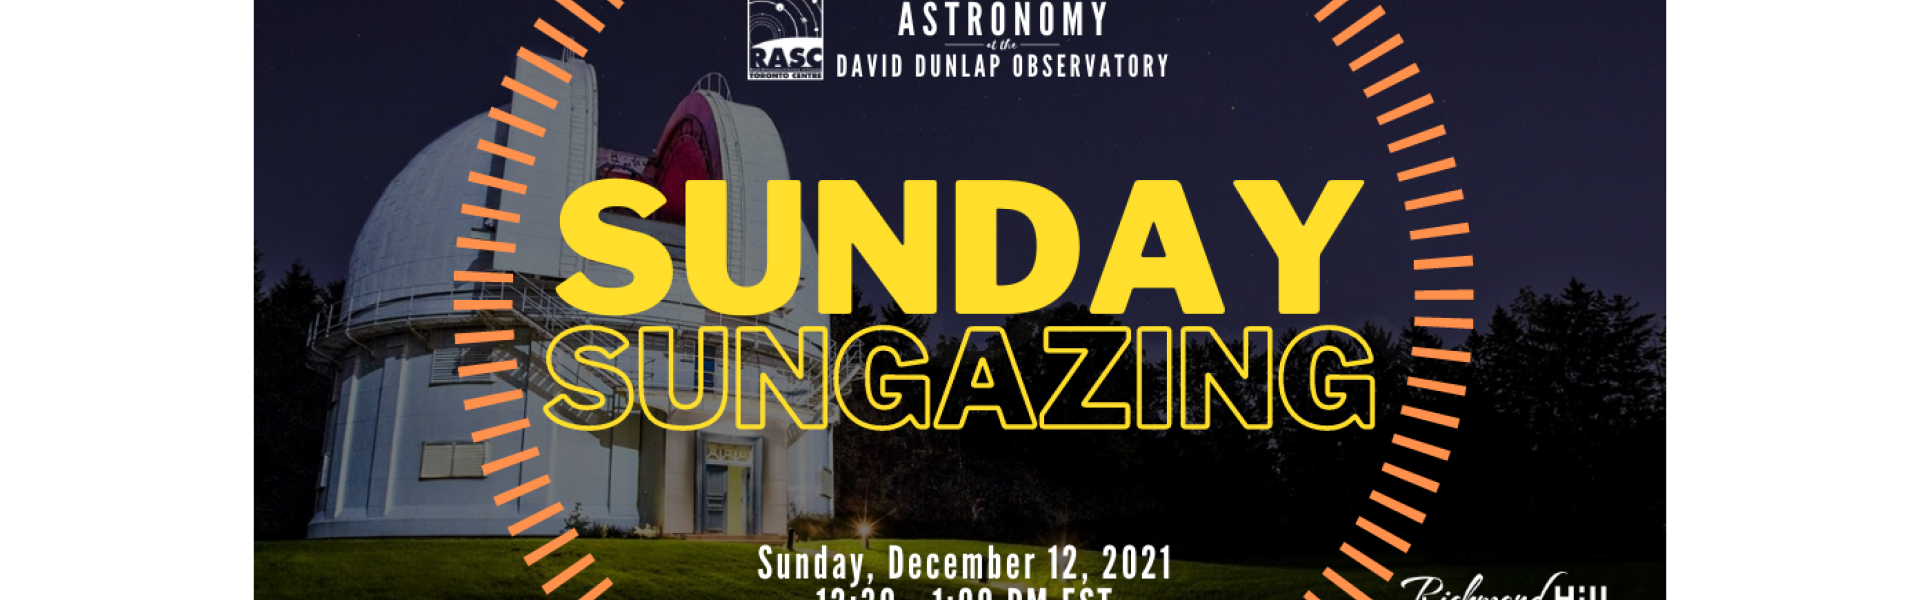 2021-12-12 Sunday Sungazing